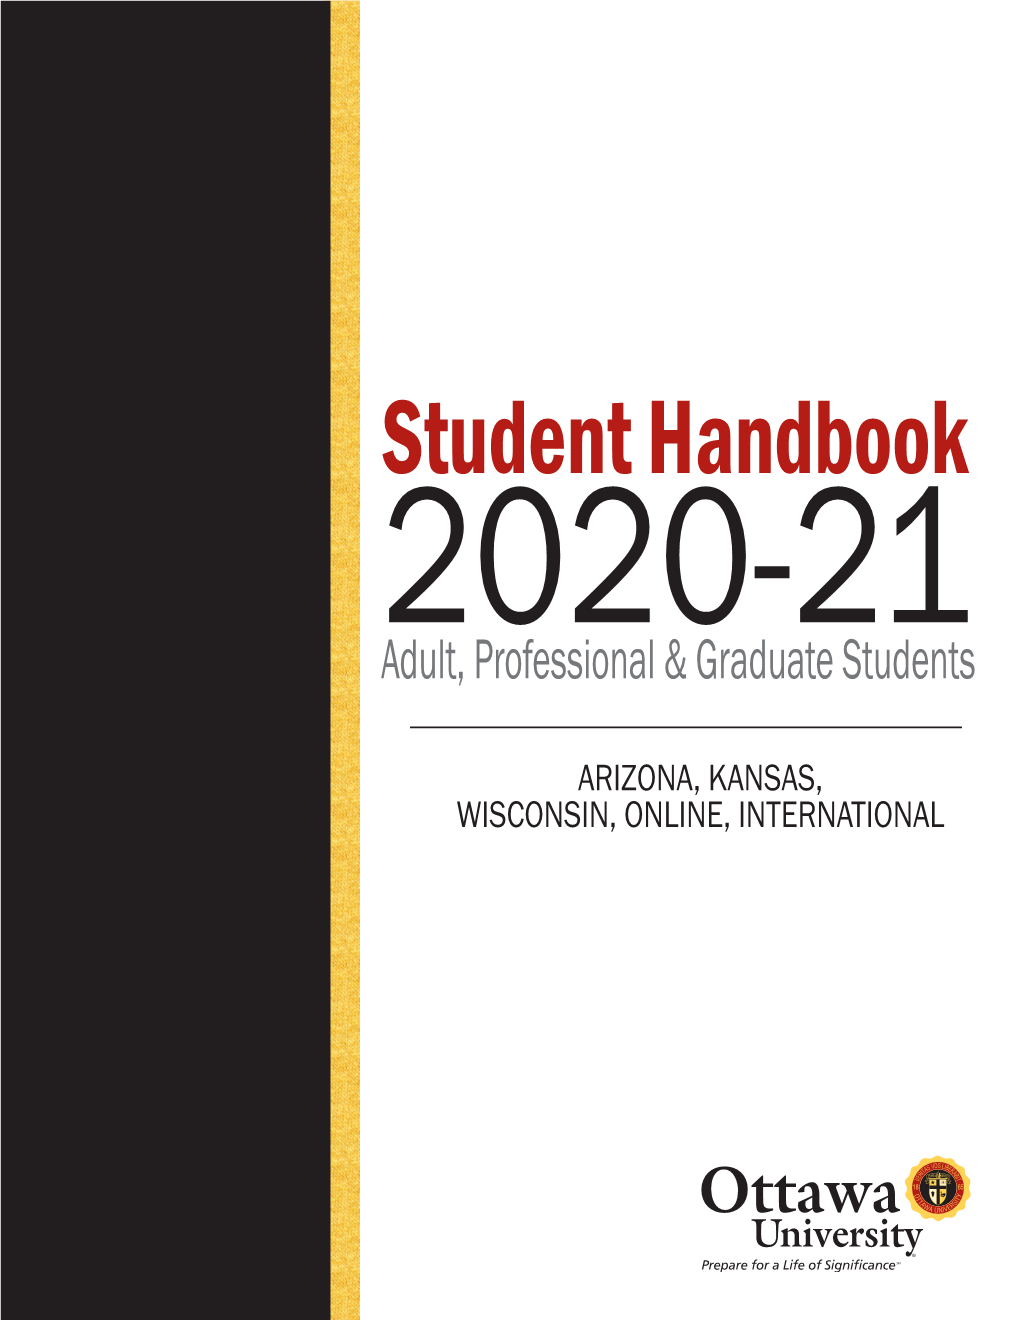 Adult and Graduate Student Handbook